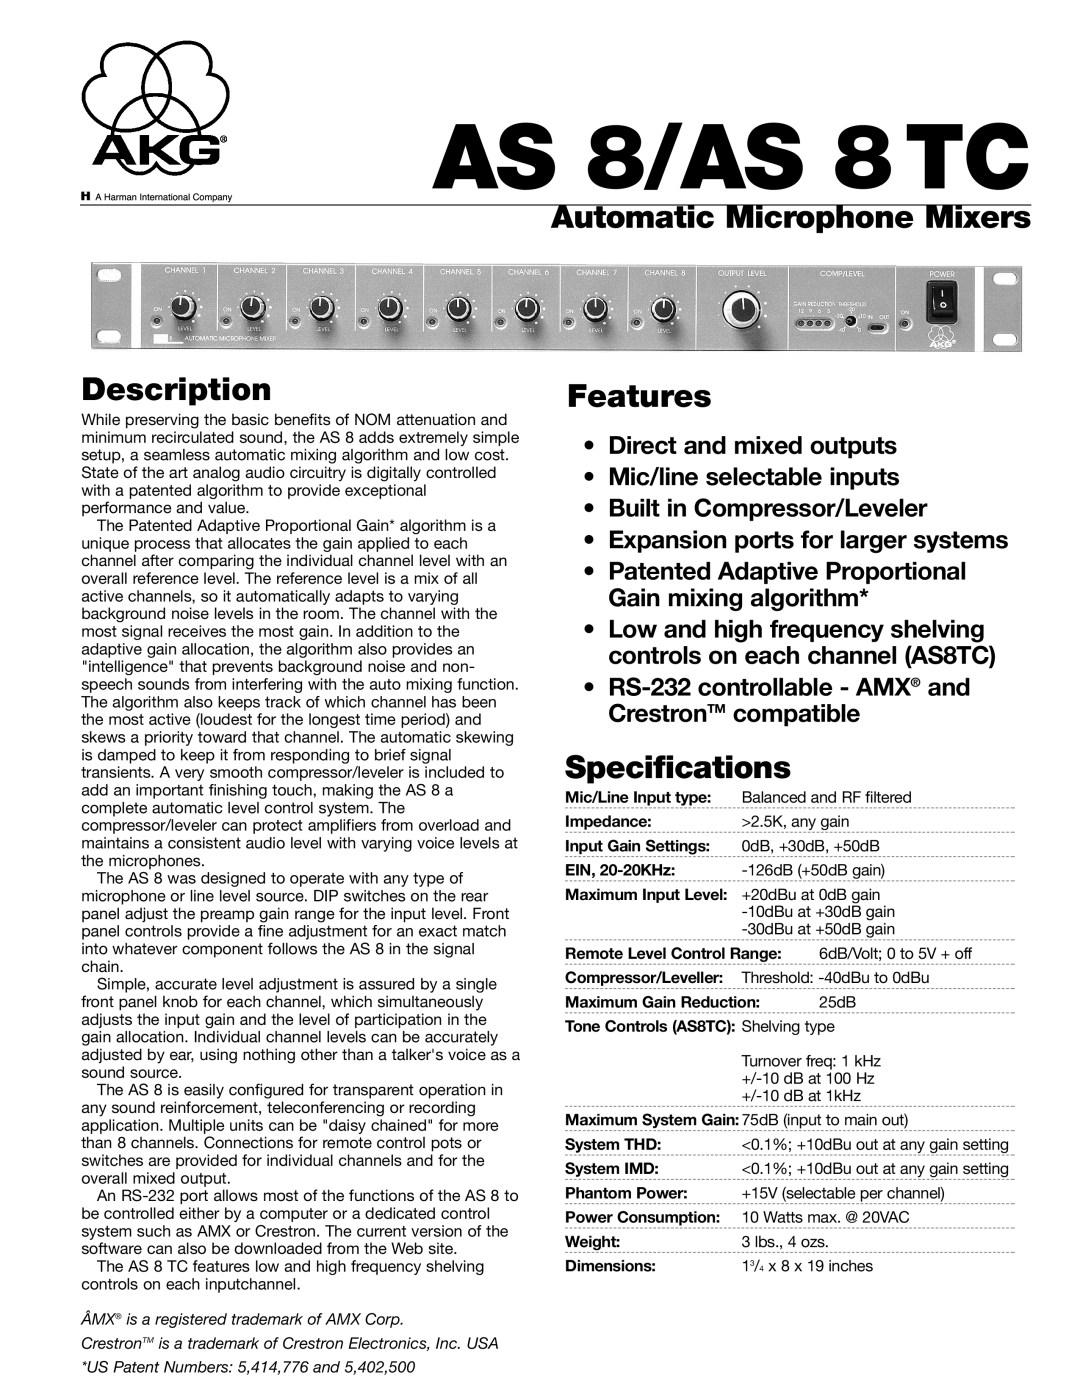 AKG Acoustics AS 8 TC specifications Automatic Microphone Mixers, Description, Features, Specifications, AS 8/AS 8TC 